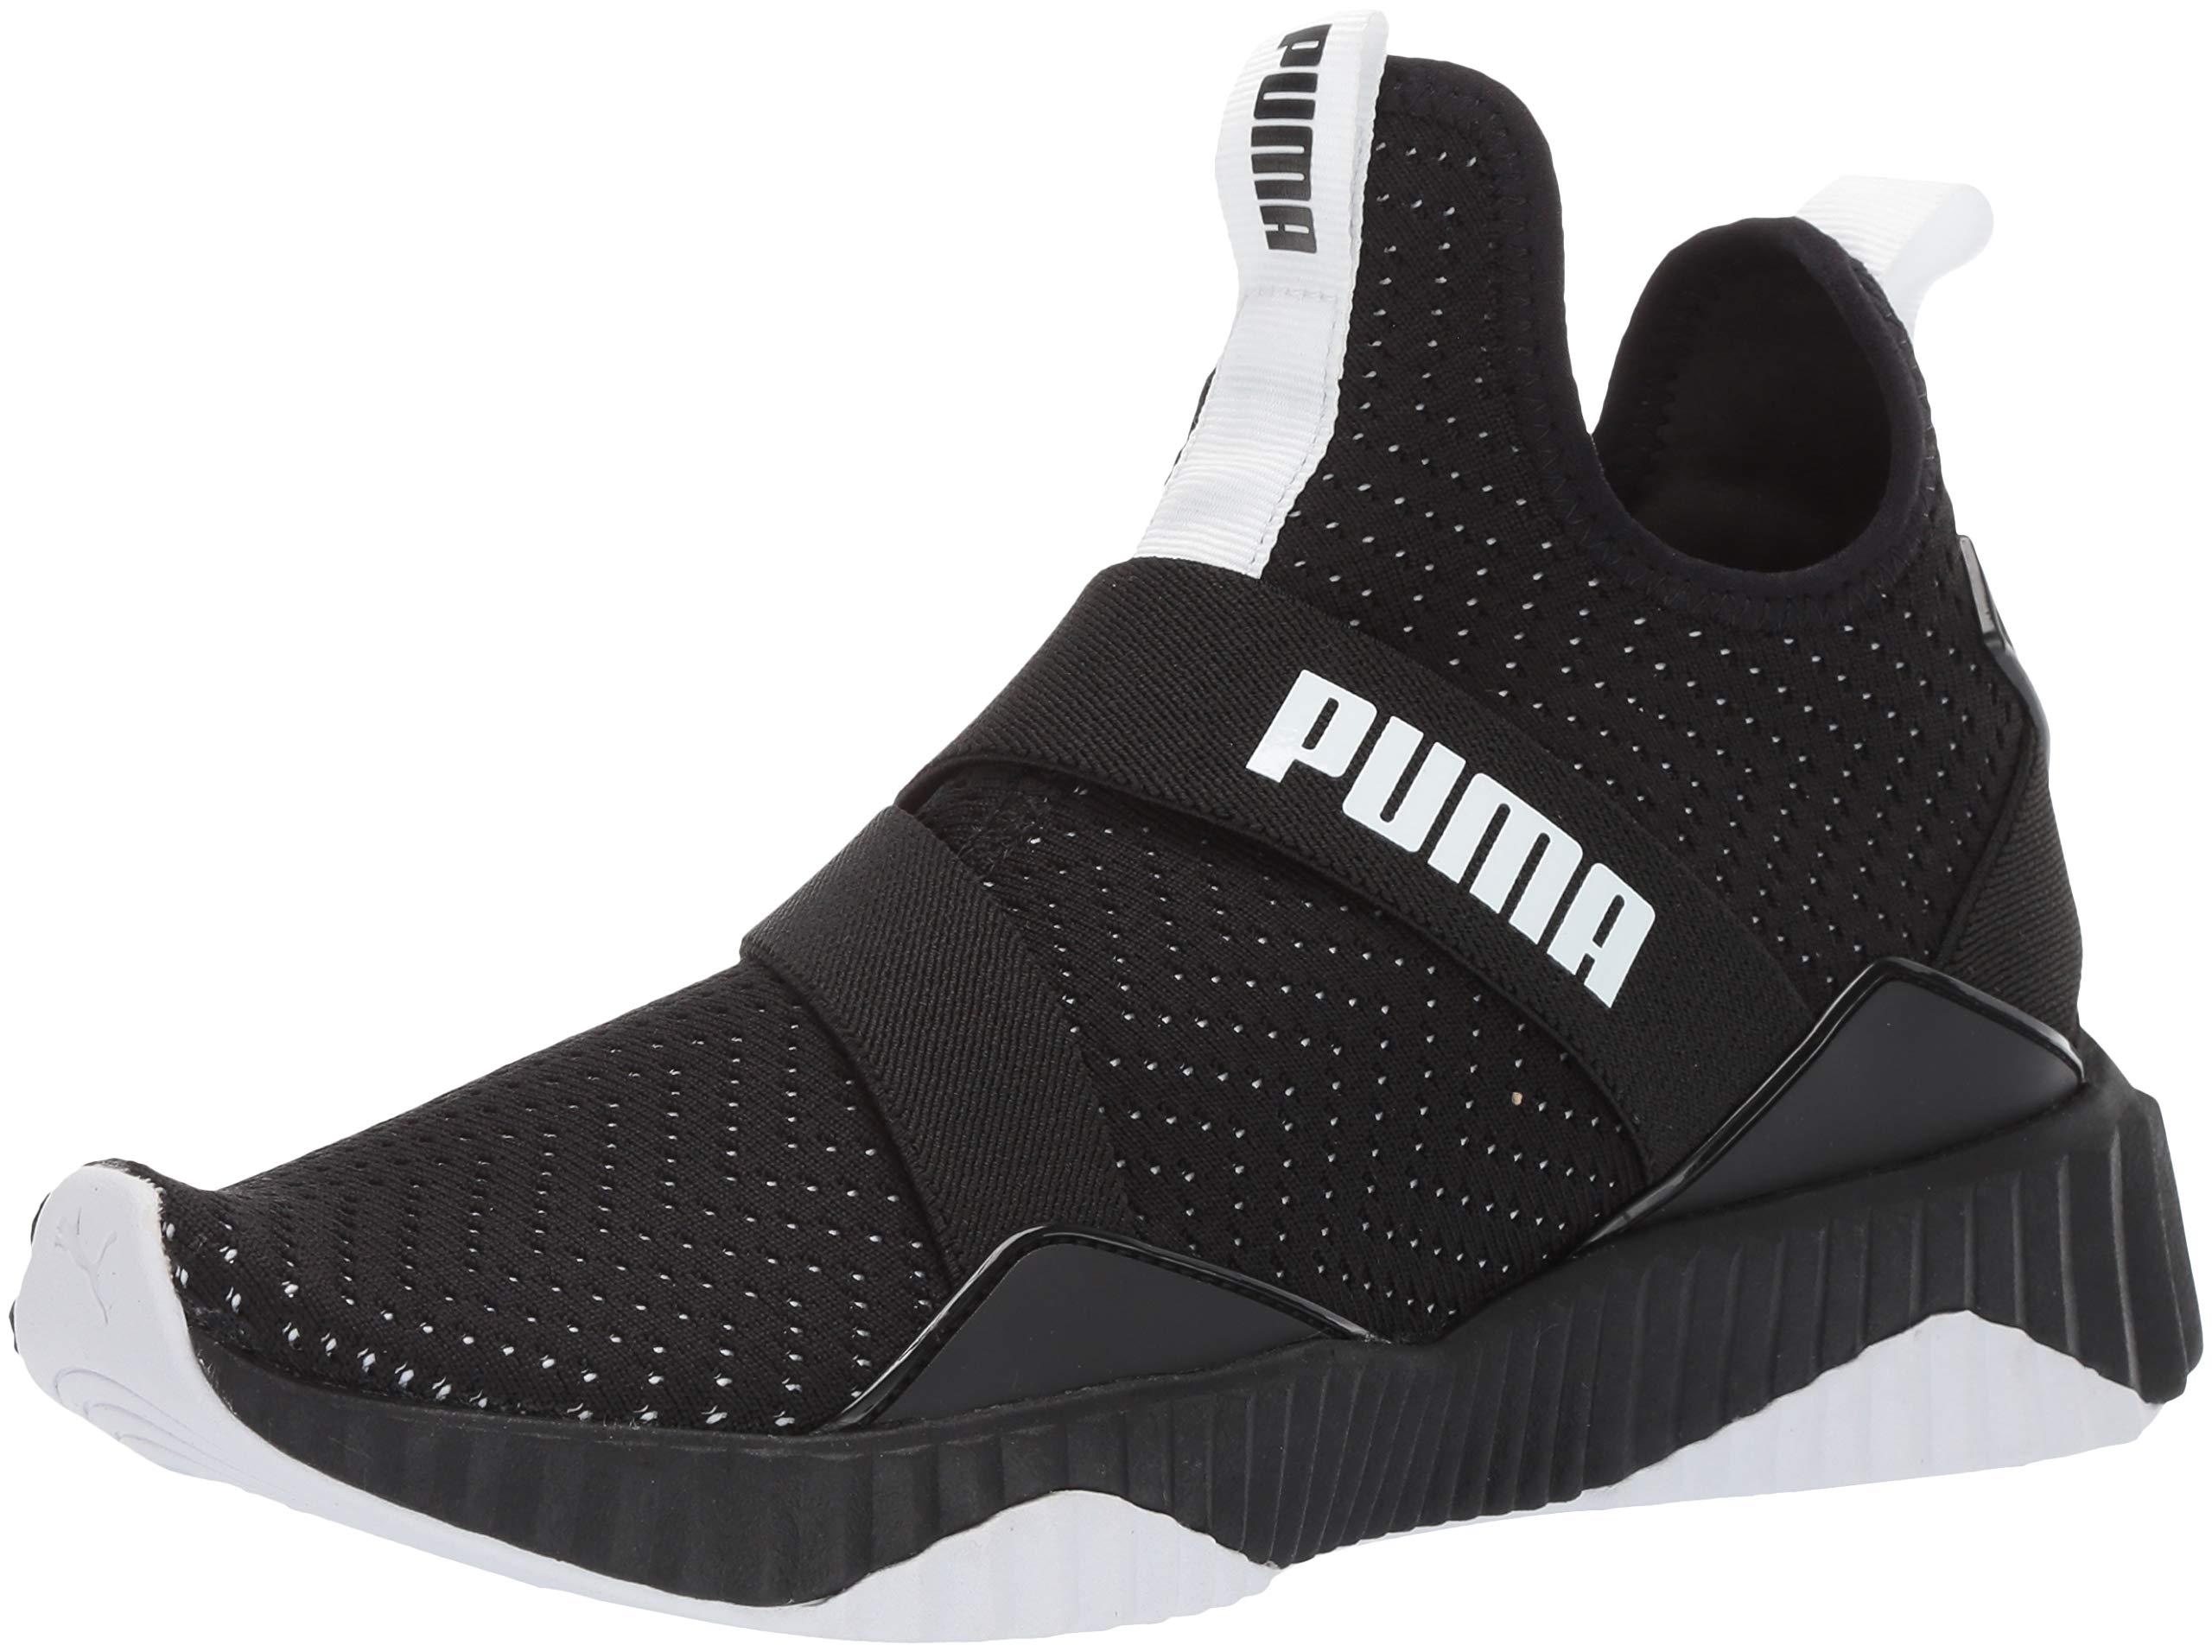 PUMA Defy Mid Core Shoes in Black/White (Black) - Lyst